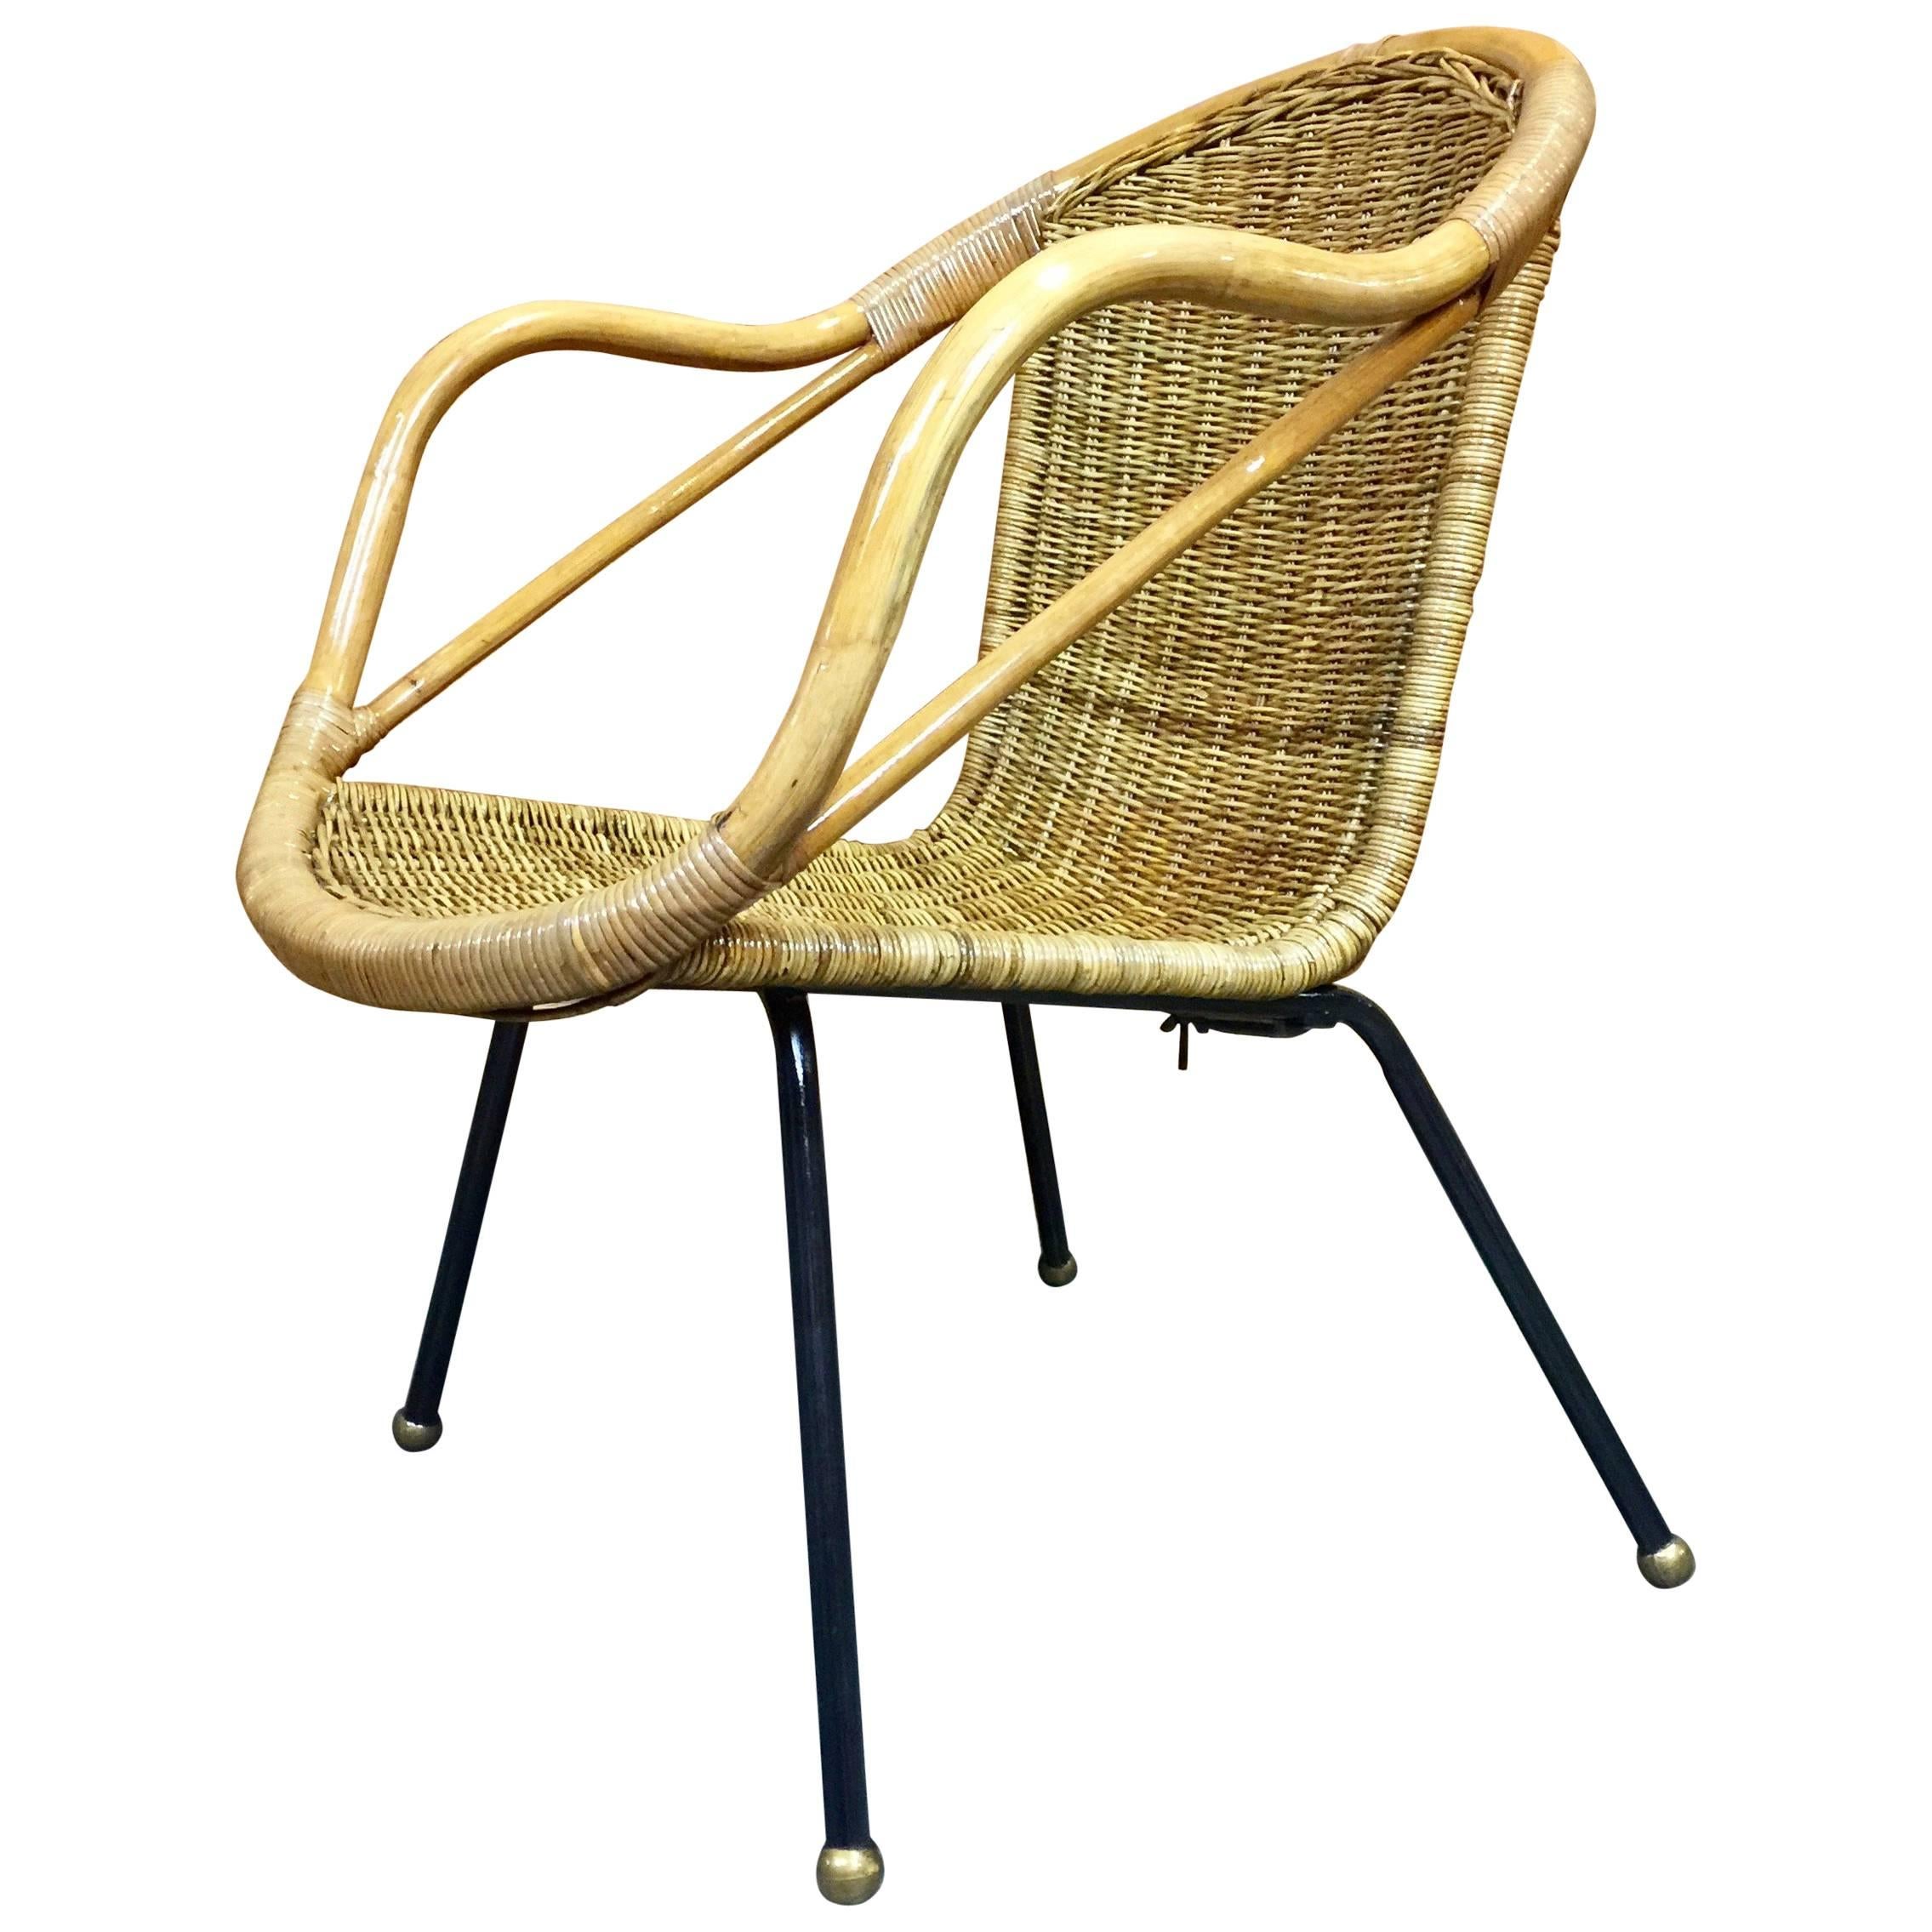 Italian Mid-Century Rattan Patio Chair, Restored